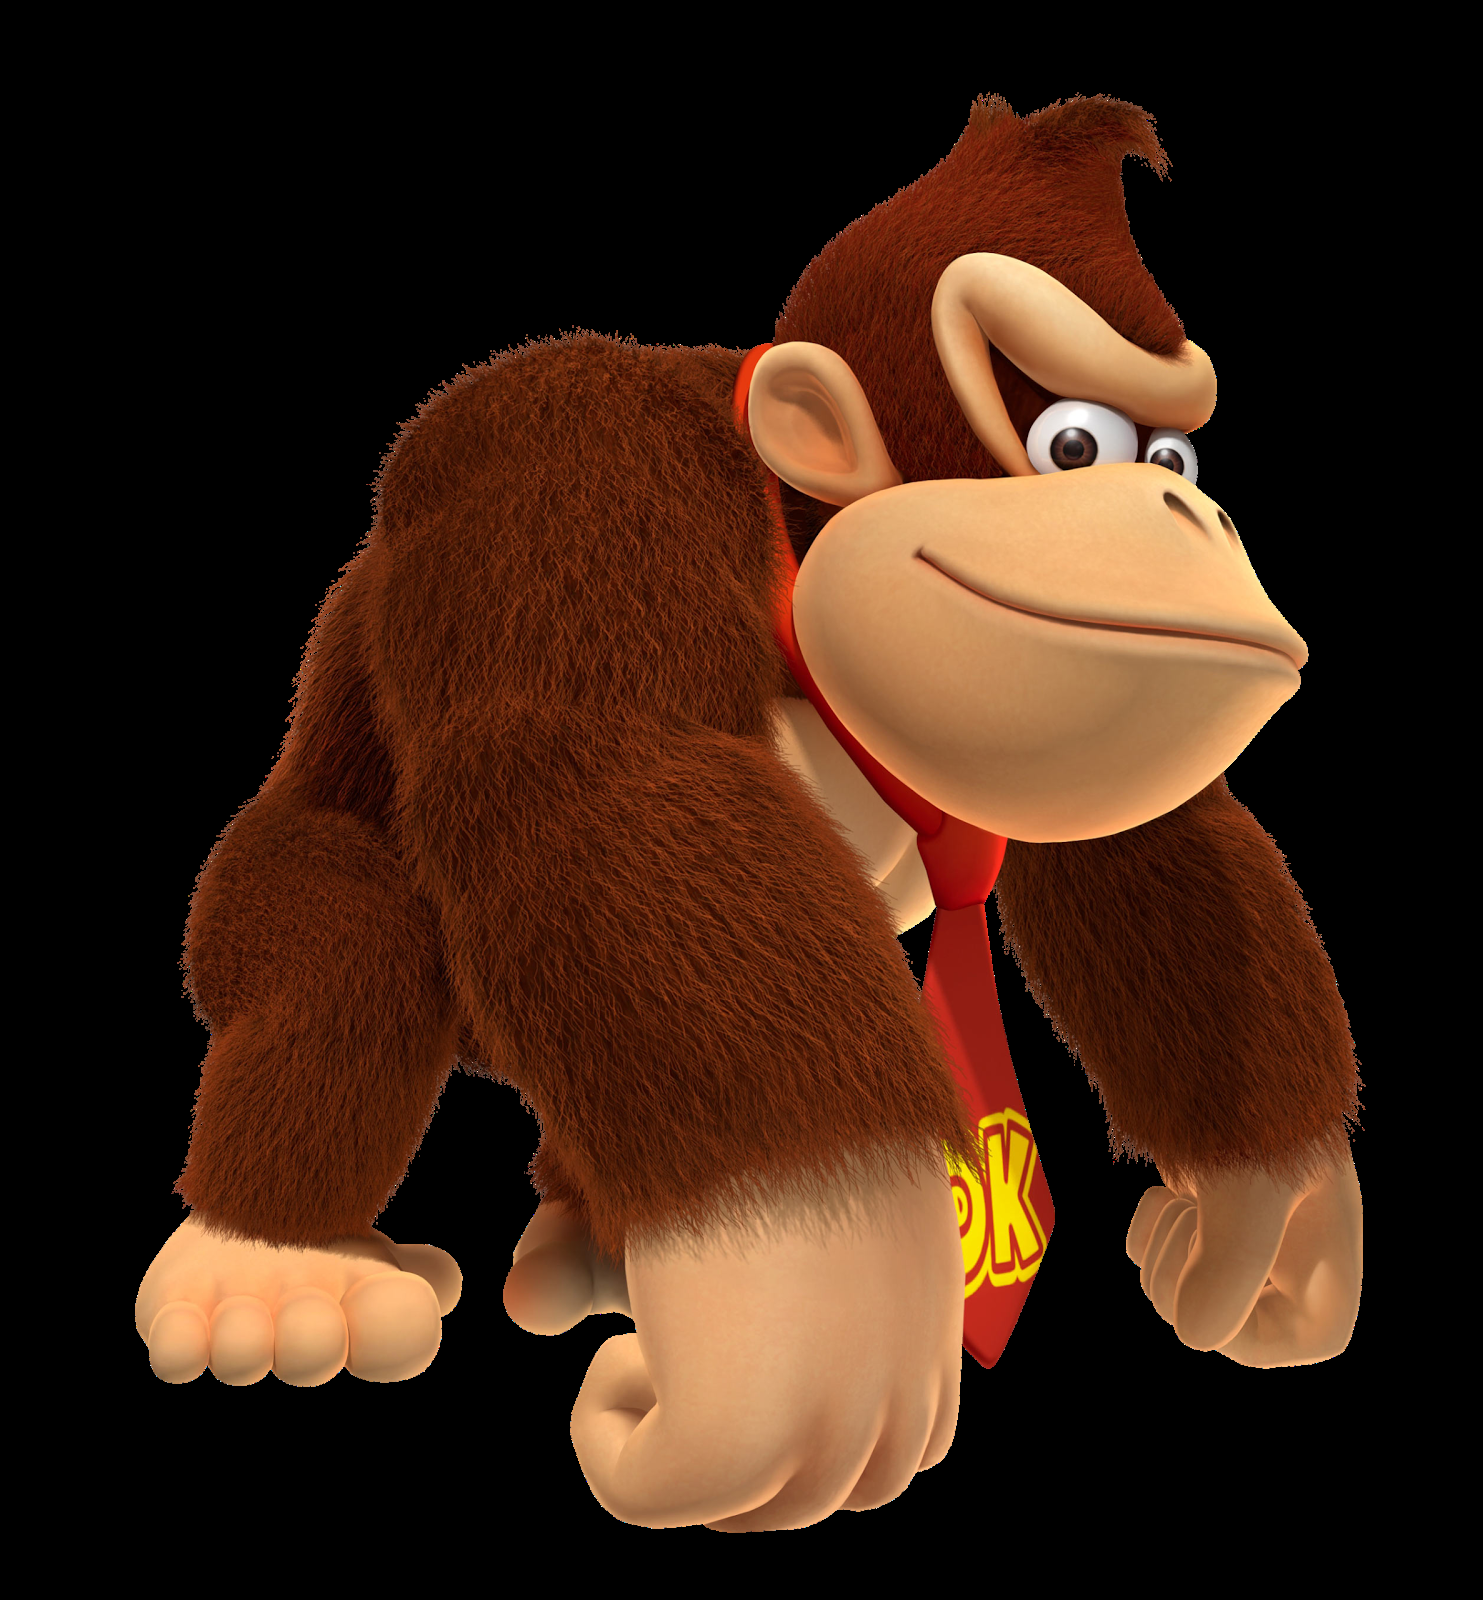 src 🔫 Donkey Kong 🔫 Donkey Kong is the main character from the Donkey Kon...